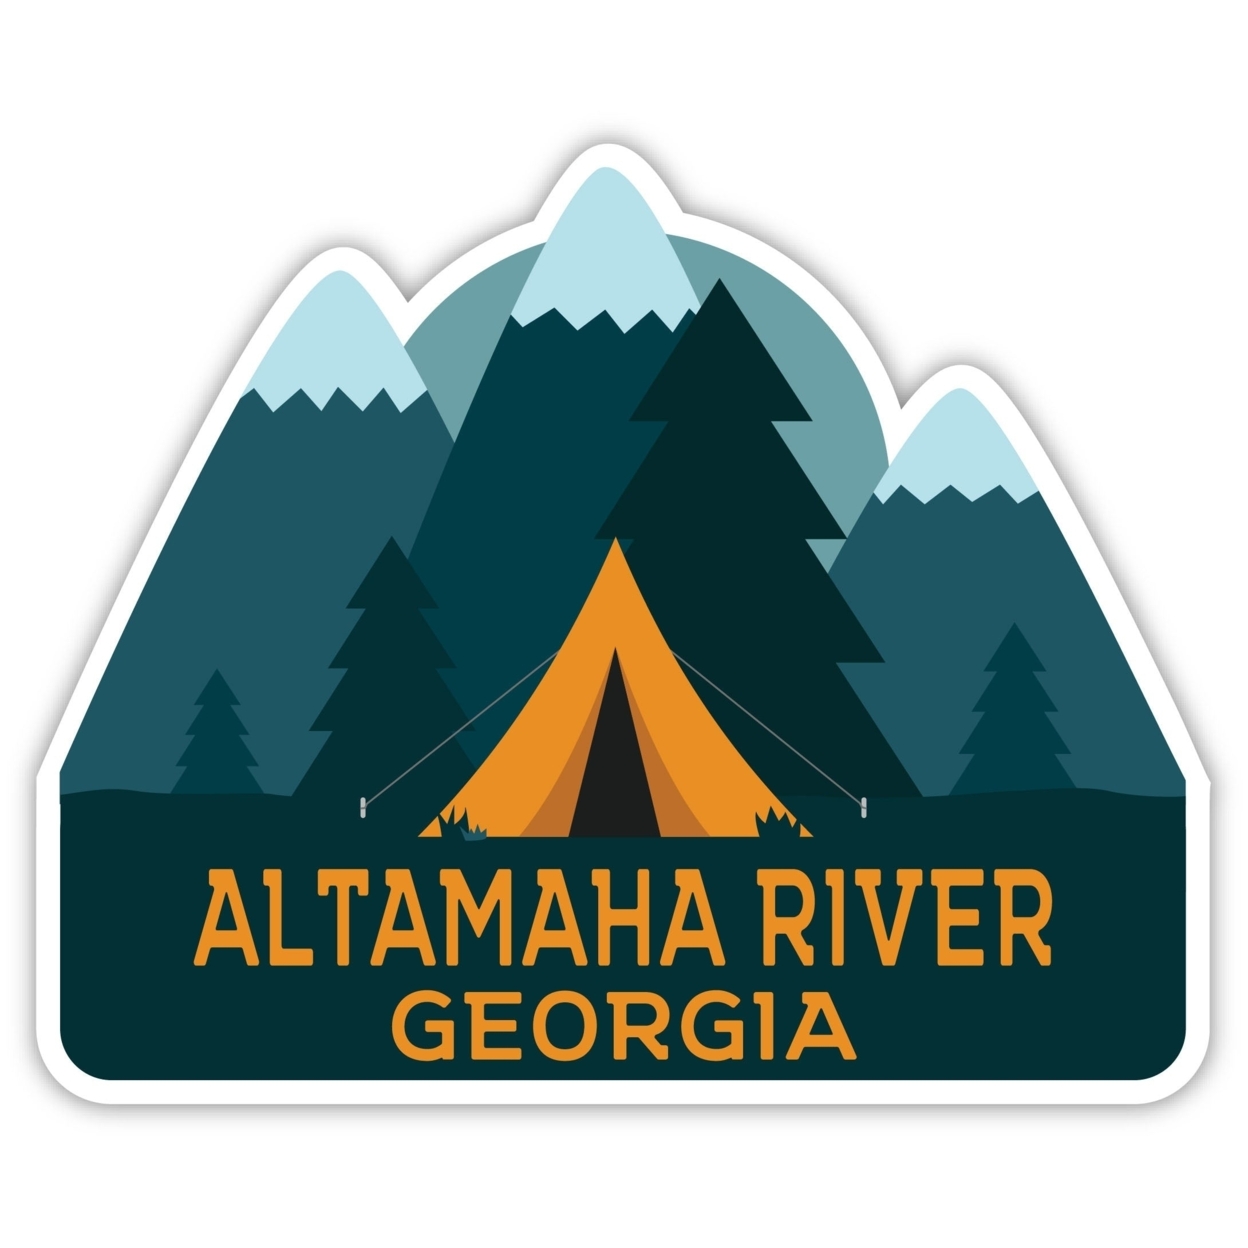 Altamaha River Georgia Souvenir Decorative Stickers (Choose Theme And Size) - 4-Pack, 10-Inch, Tent